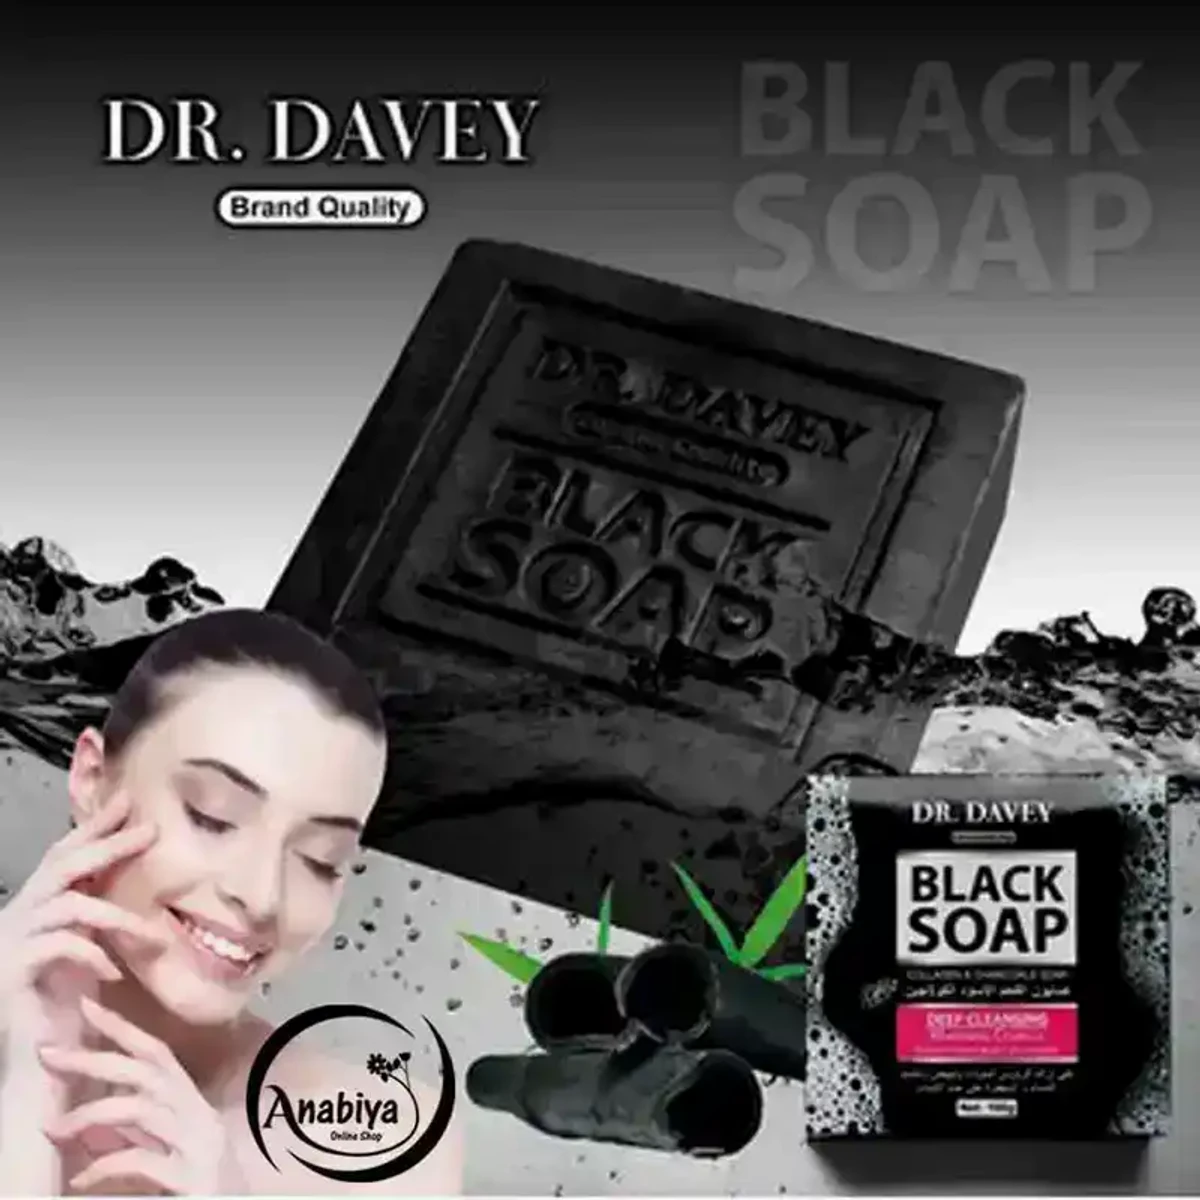 DR. DAVEY black soap